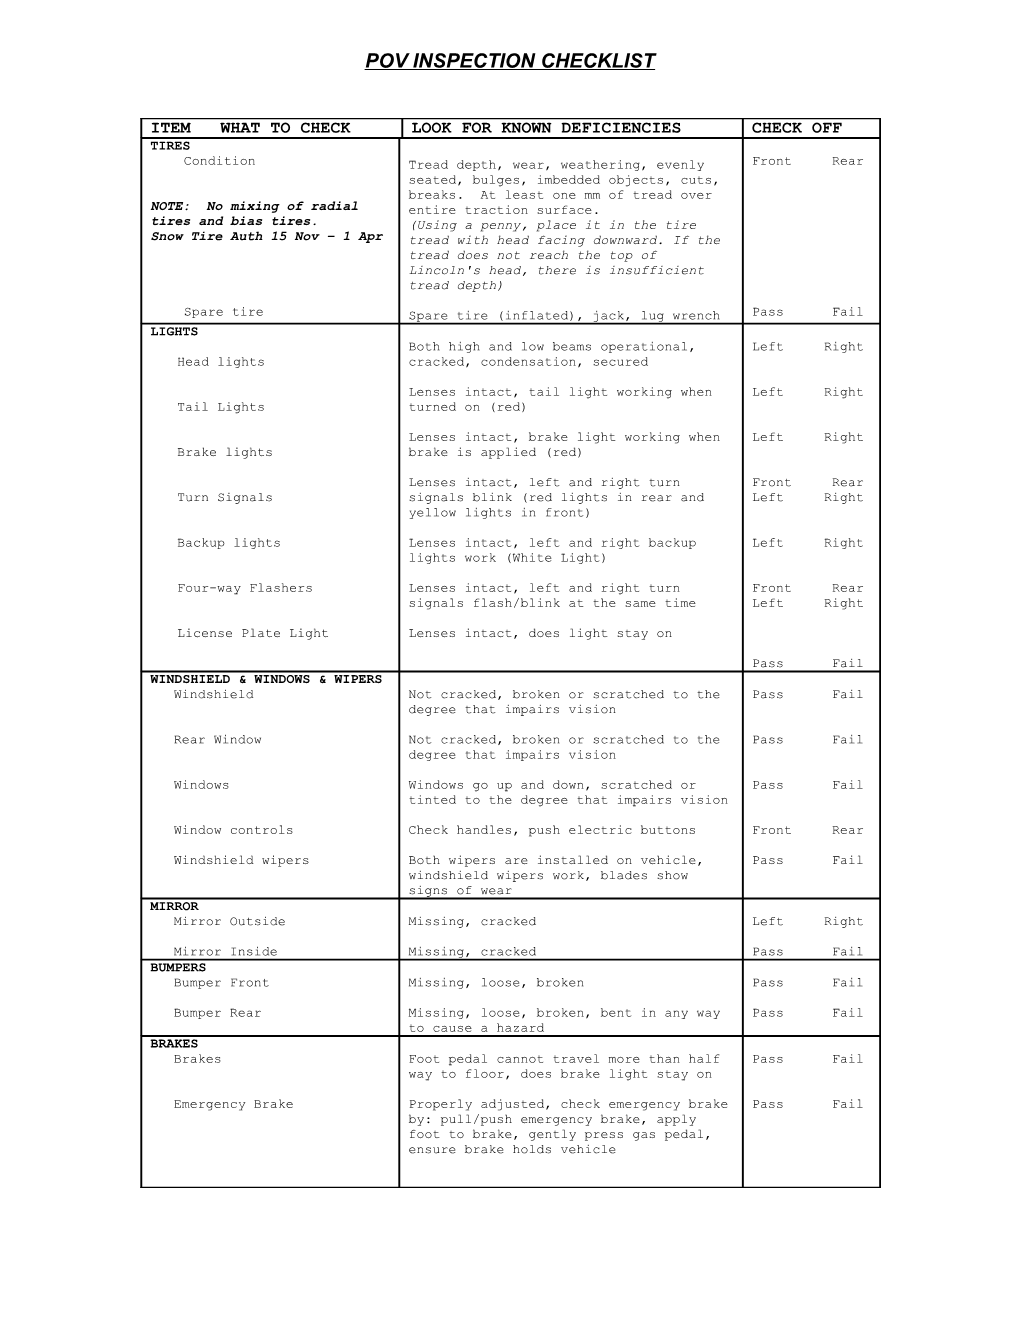 POV Inspection Checklist (MS Word Version) - Armyproperty.Com